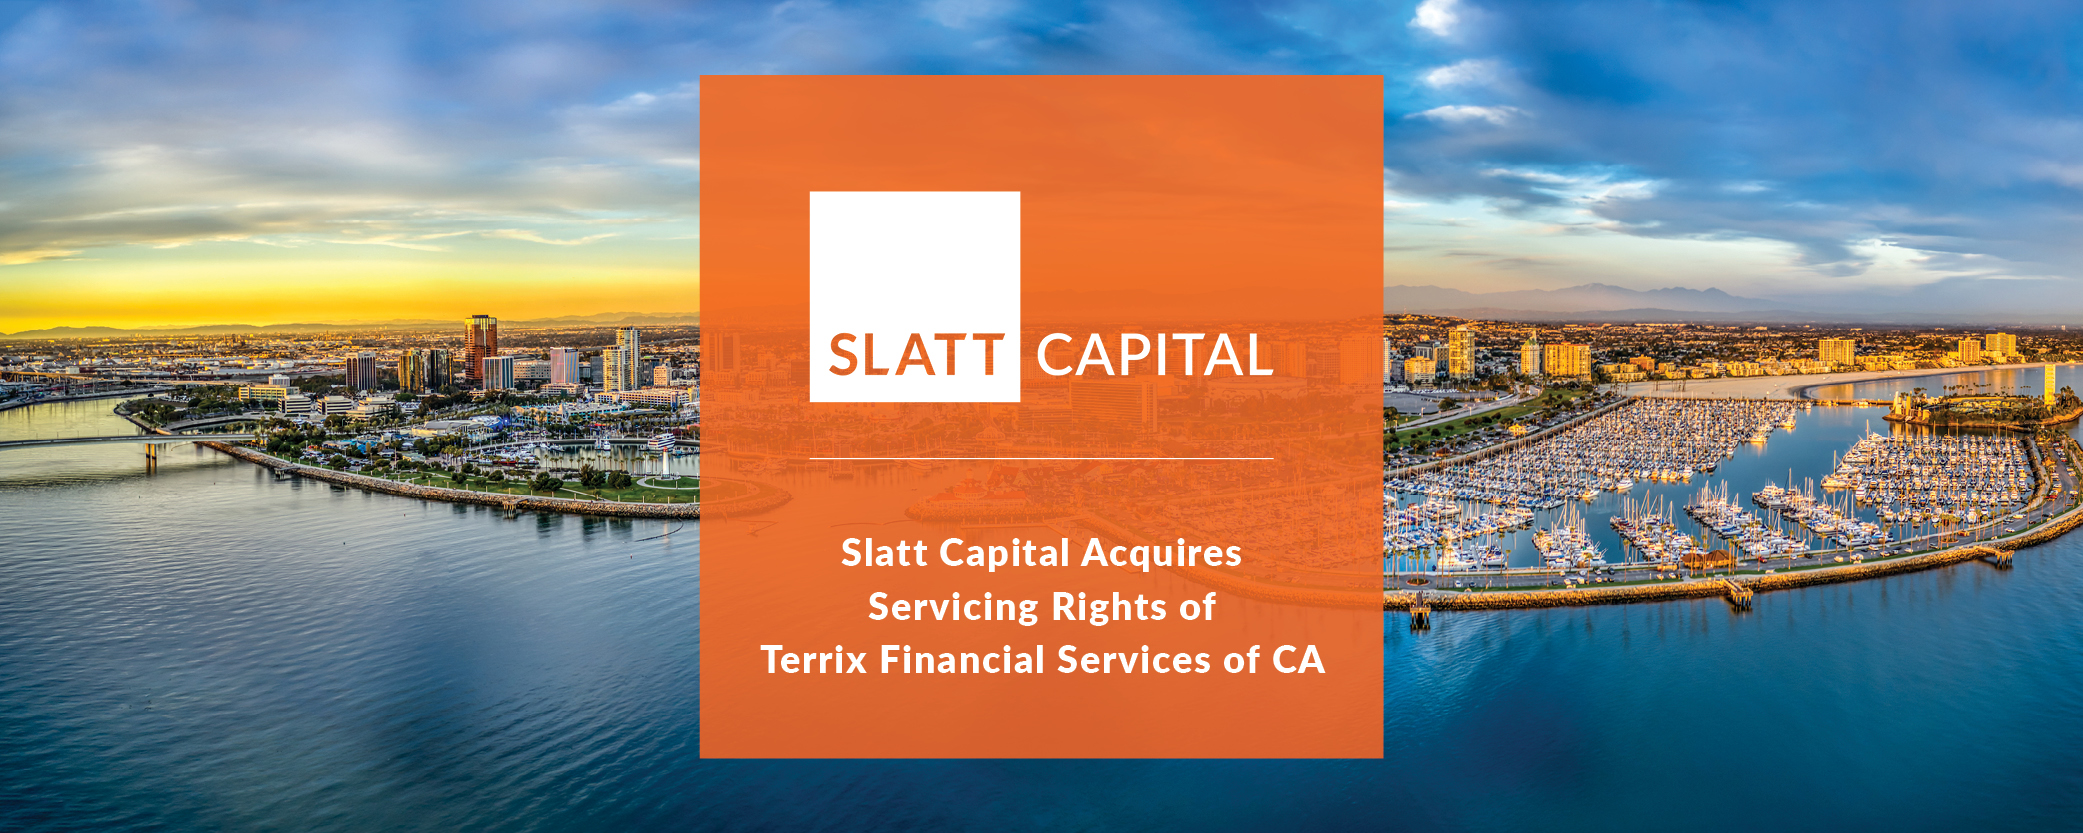 Slatt capital acquires the servicing rights of terrix financial services of california